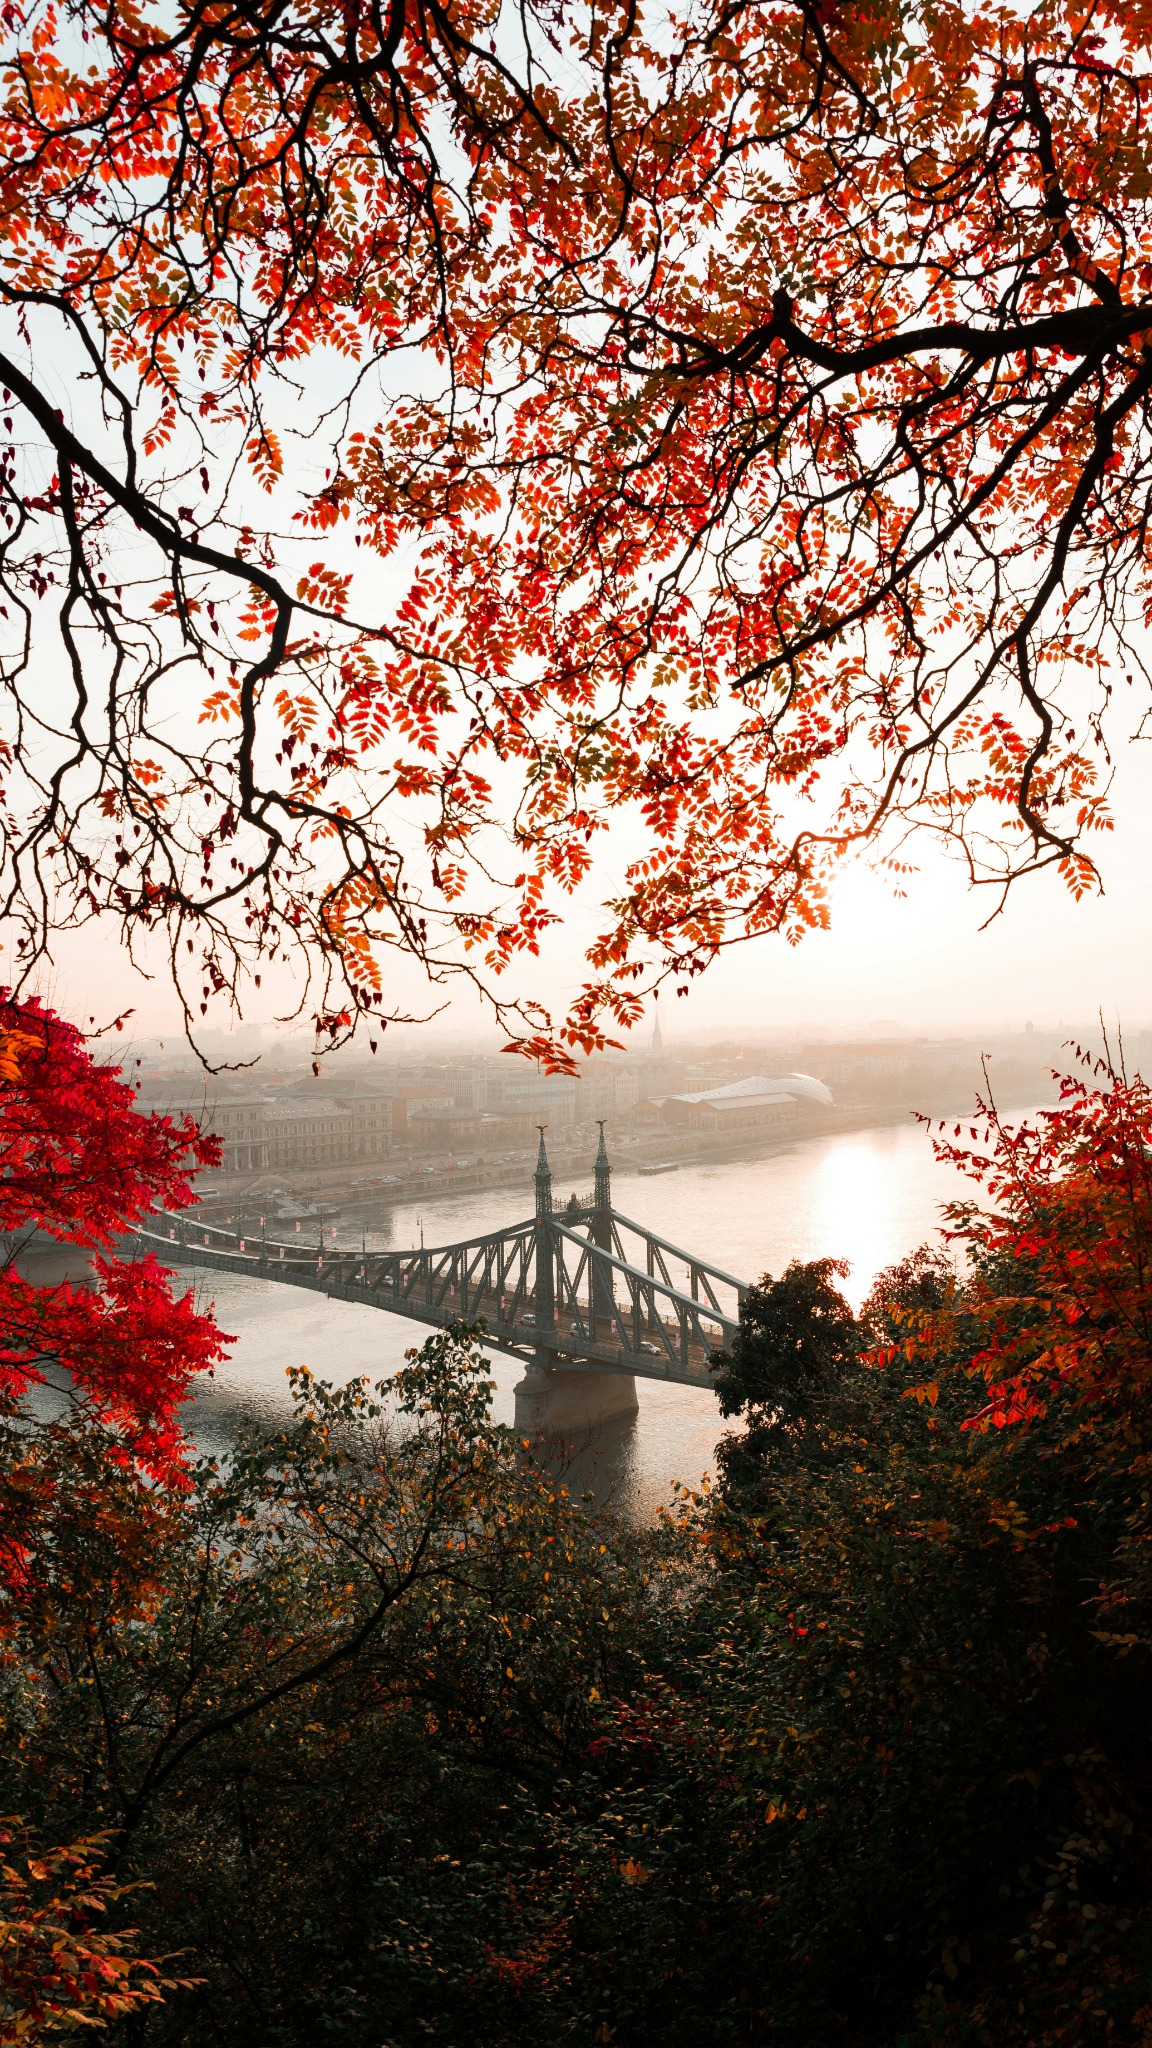 Autumn leaves bridge view